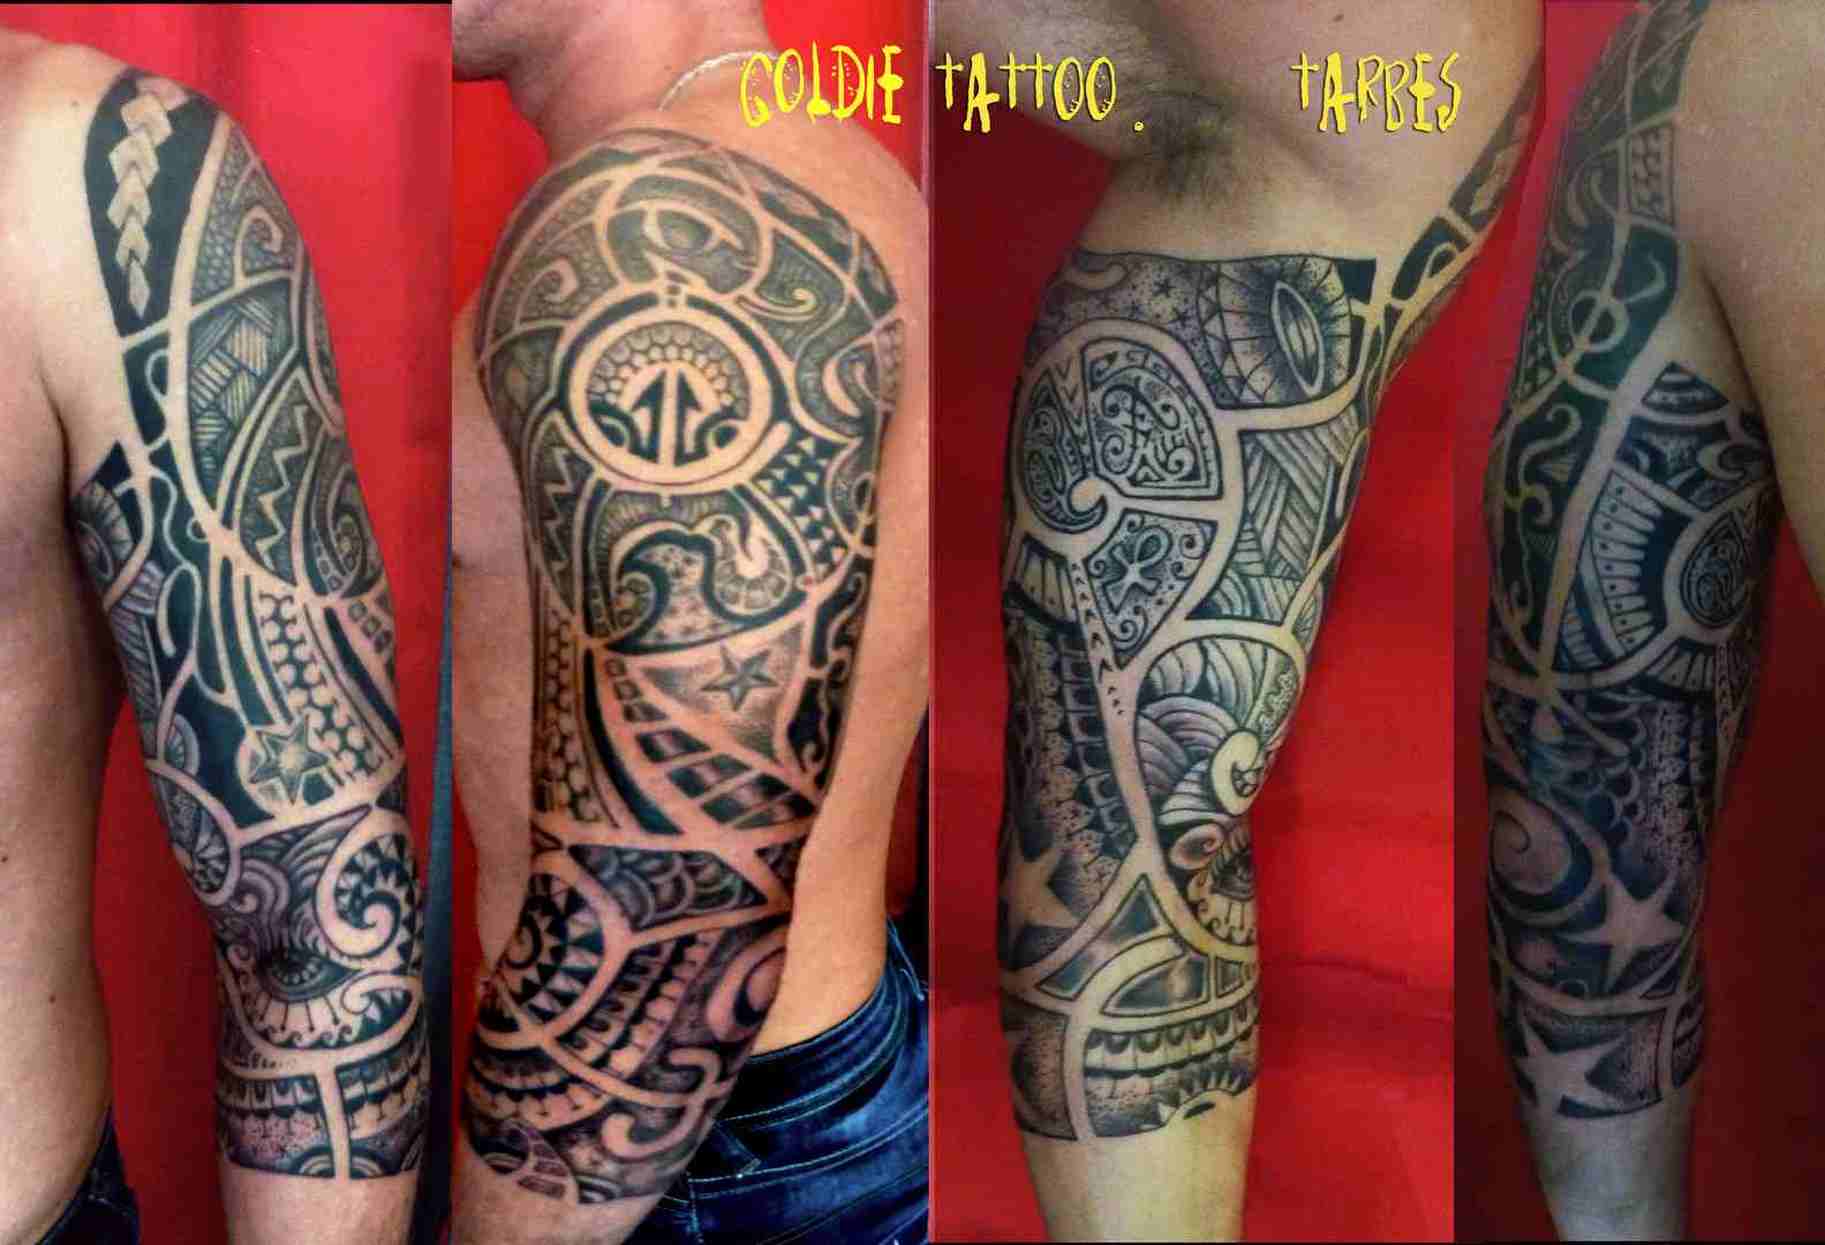 goldie-tattoo-tarbesoct-2013-manchette-maori-symboles-hdtv-1080site-hdtv-1080site.jpg